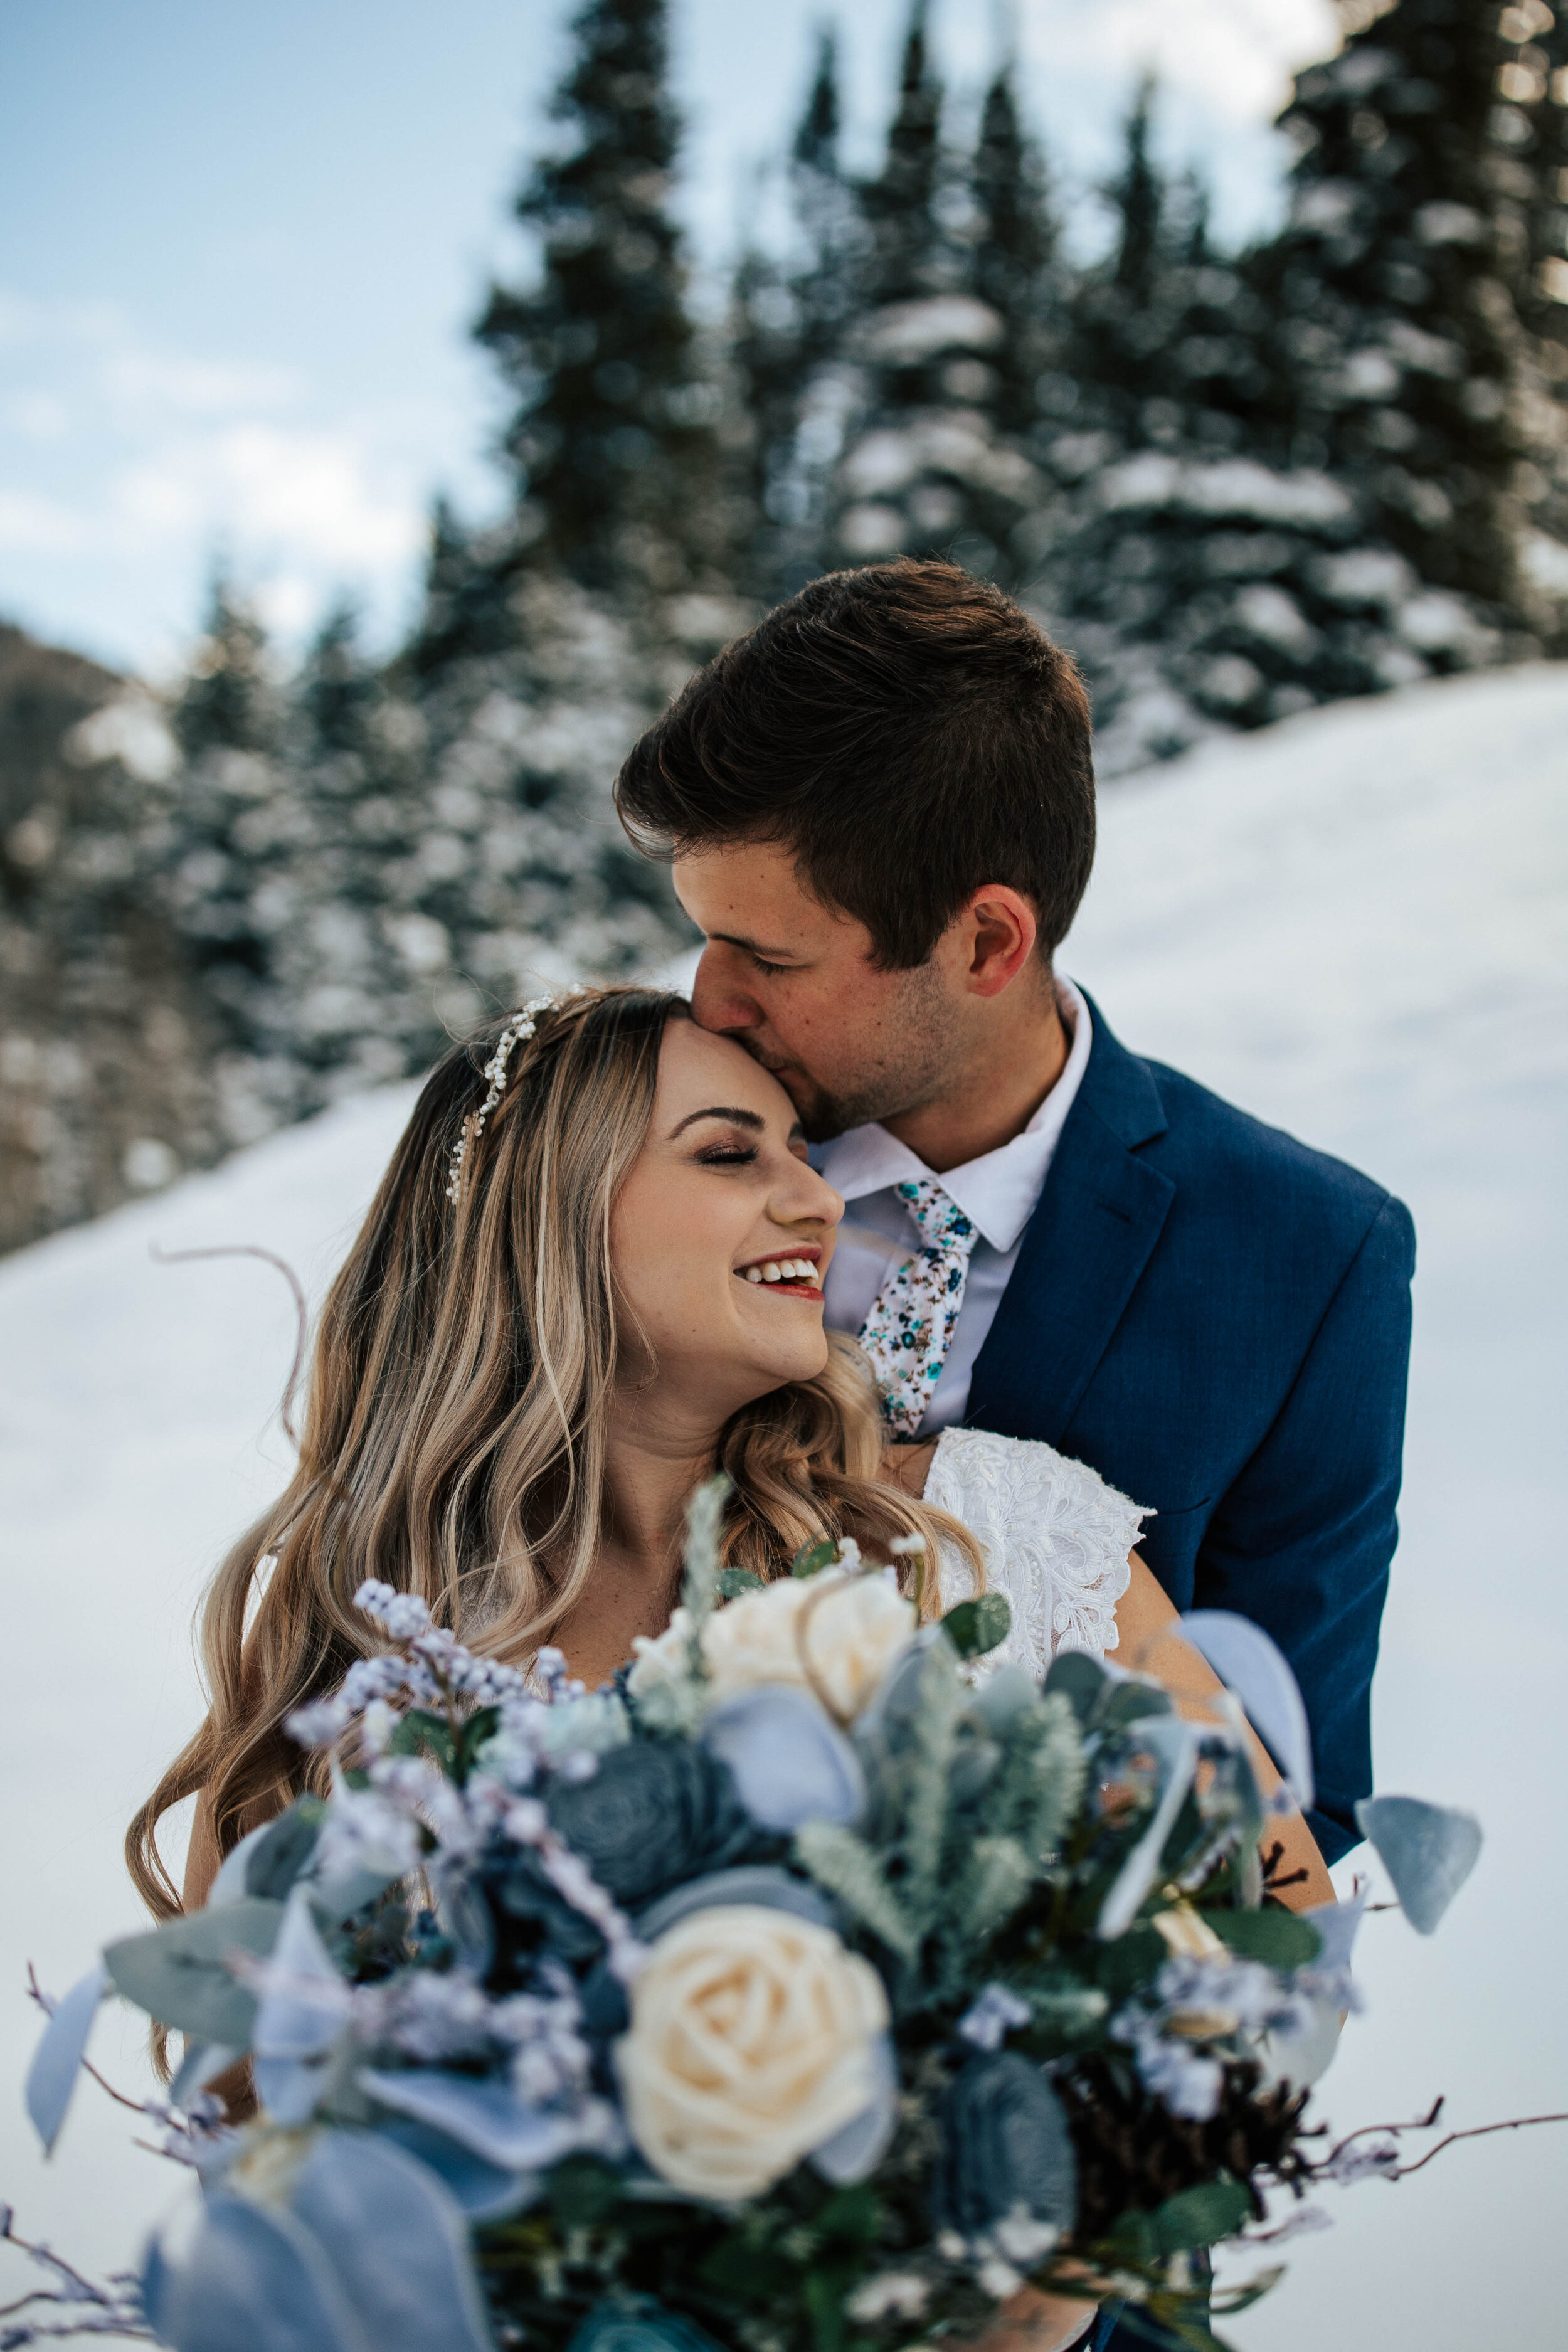 Wedding couple winter wedding bridals snow #winterwedding #weddingphotographer #bridals #bridalshoot #coupleshoot photoshoot